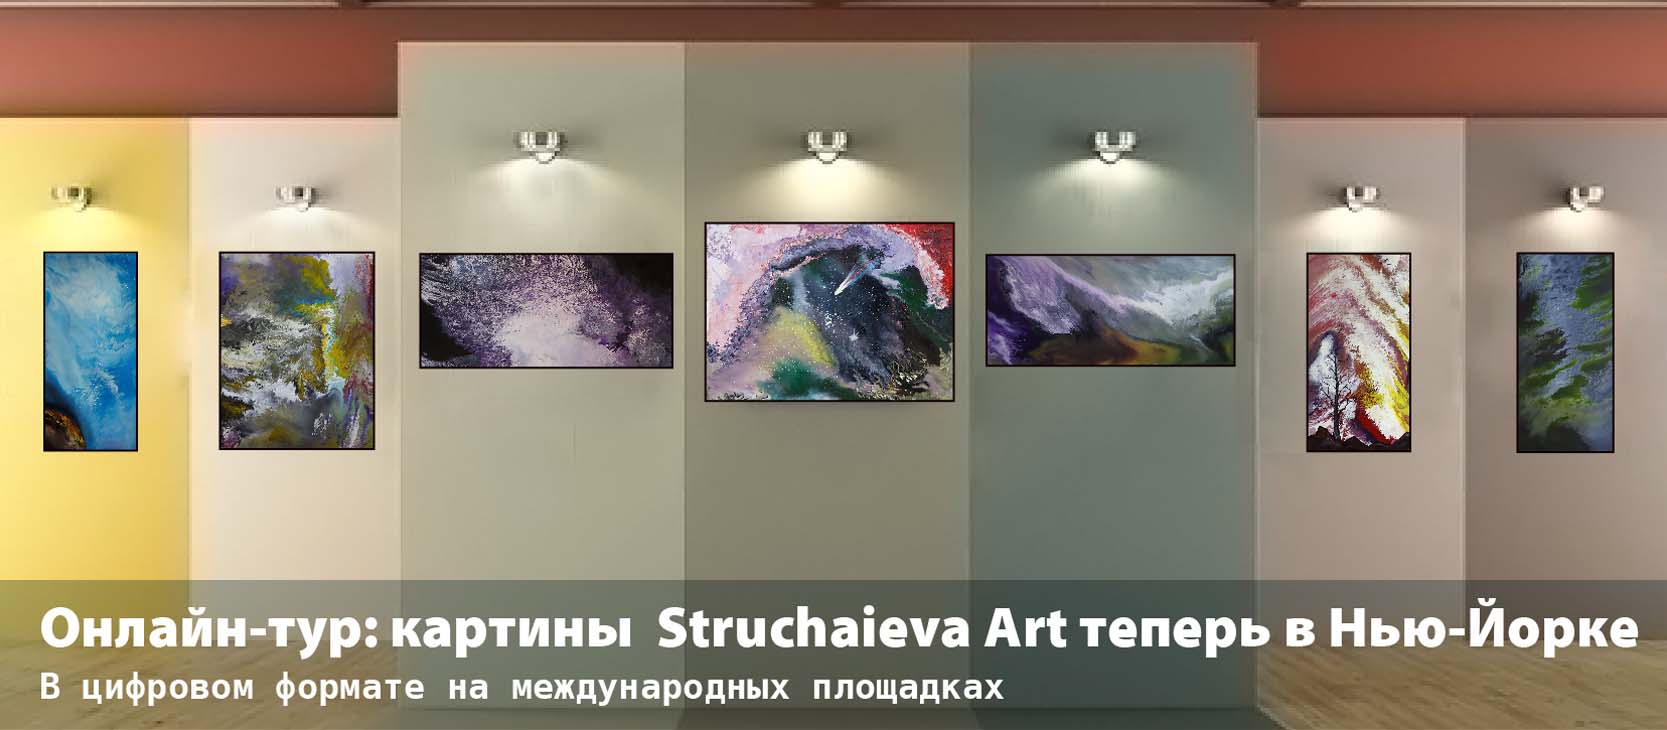 Онлайн-тур: картини Struchaieva Art тепер у Нью-Йорку